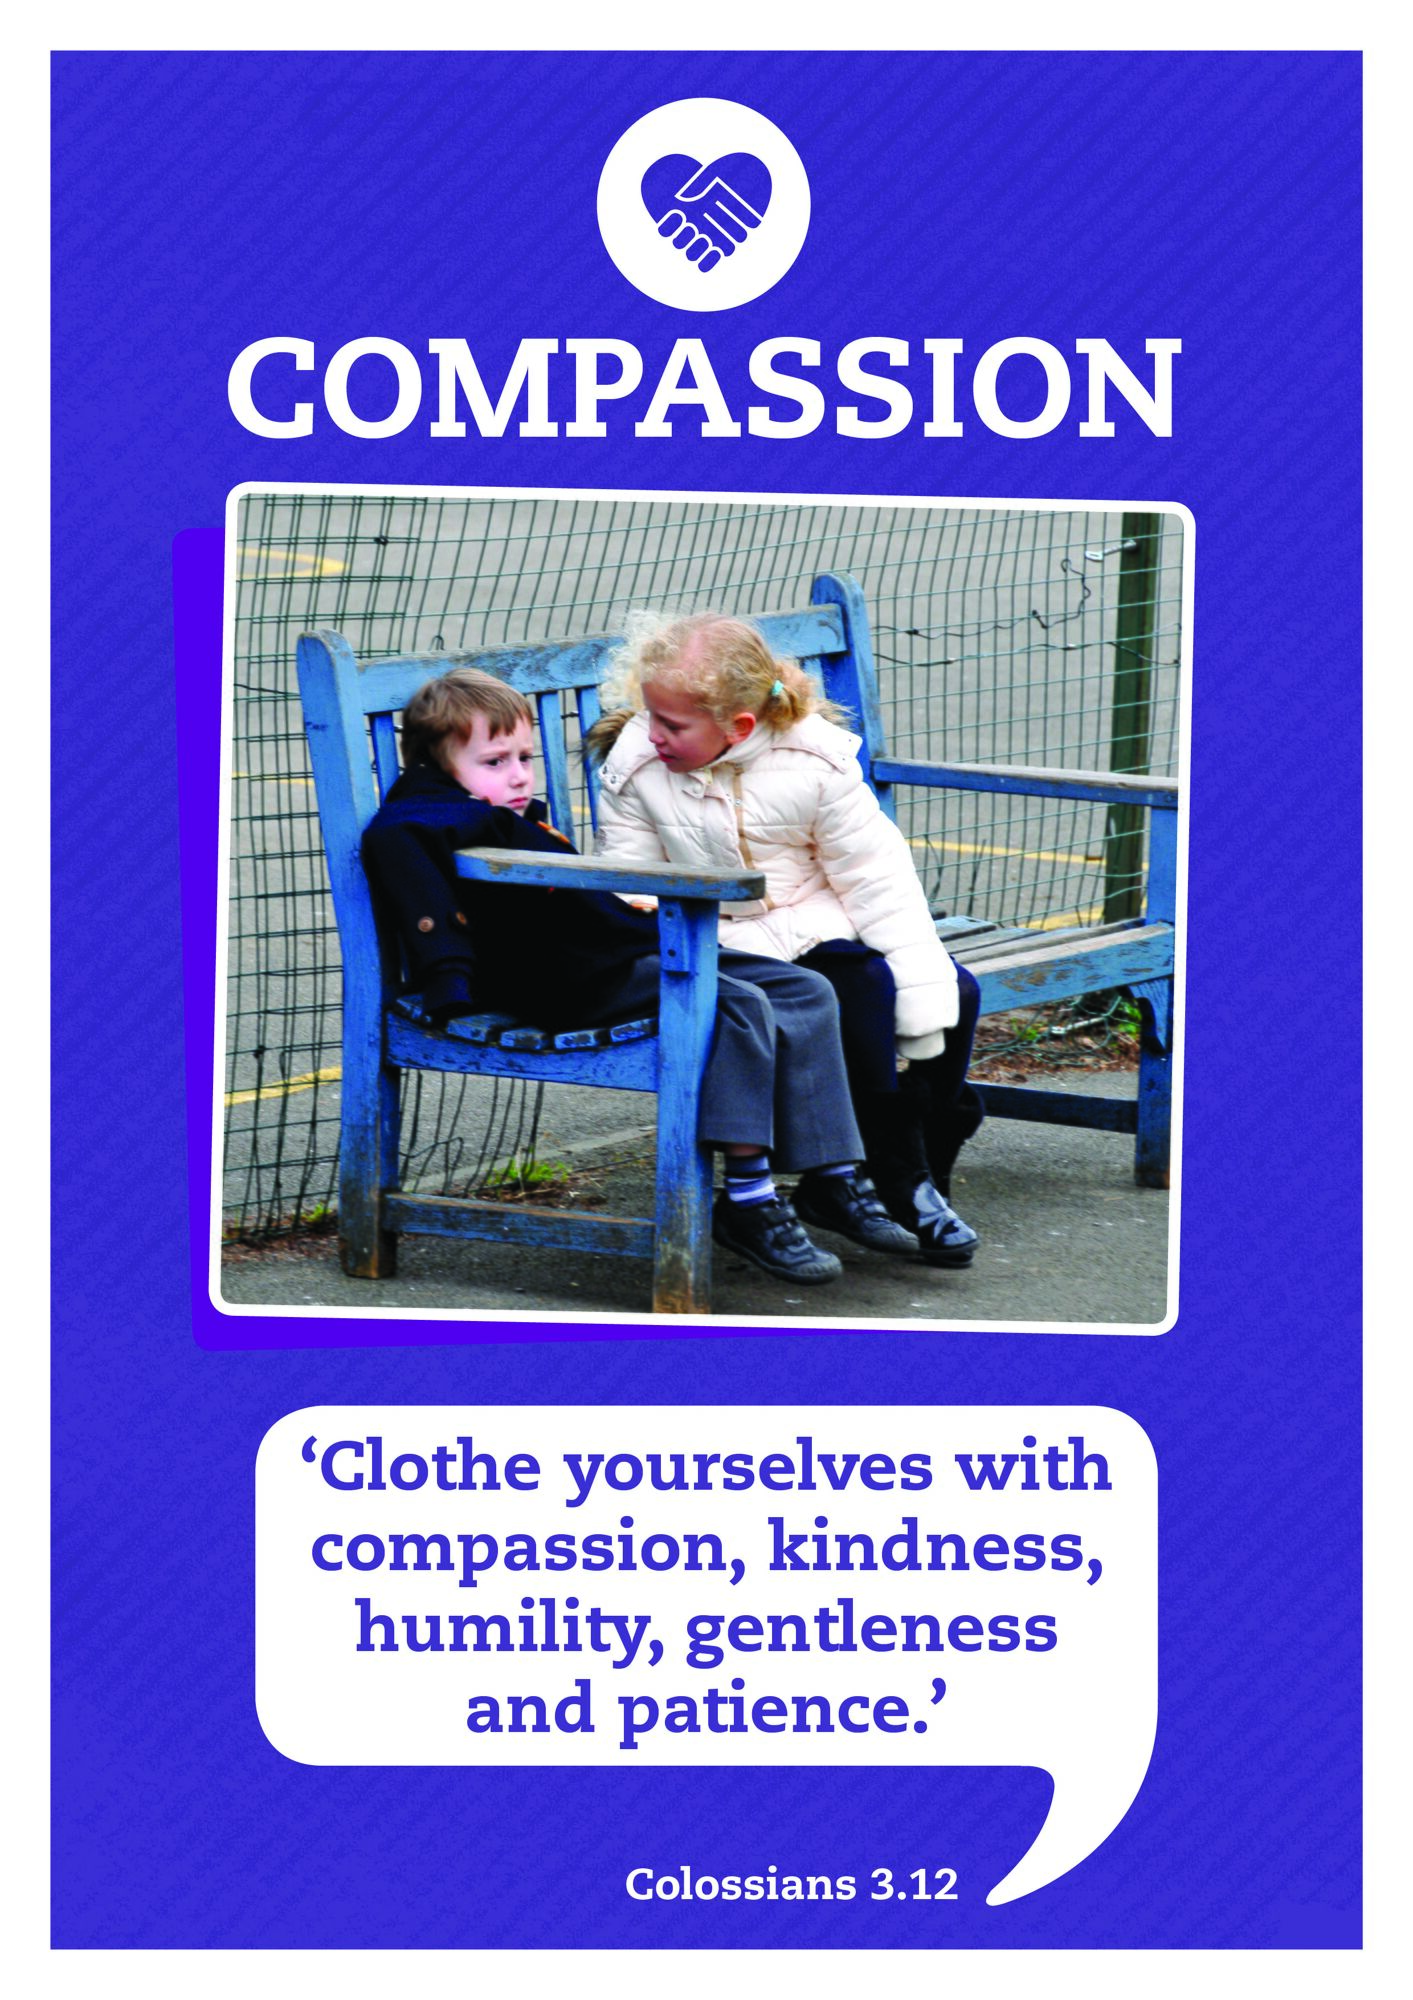 Compassion poster